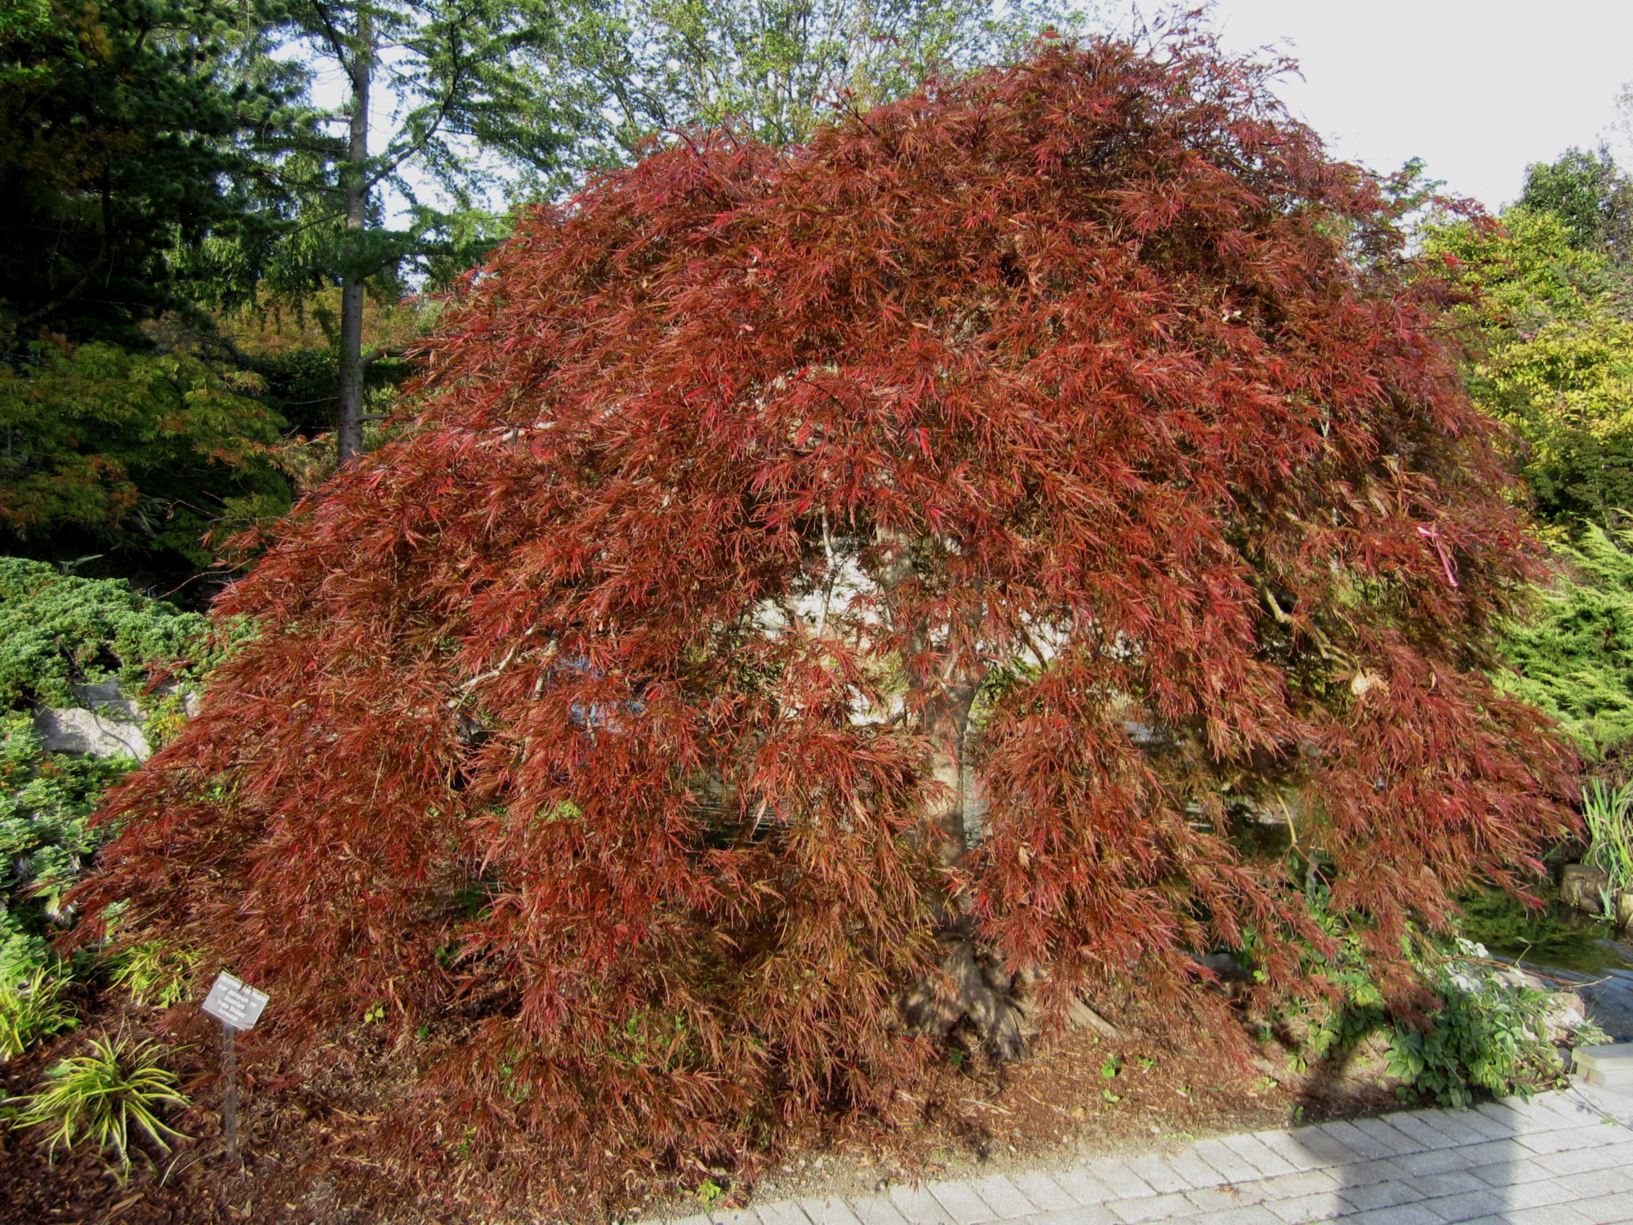 Acer palmatum var. dissectum 'Inaba Shidare' - Japanese red maple